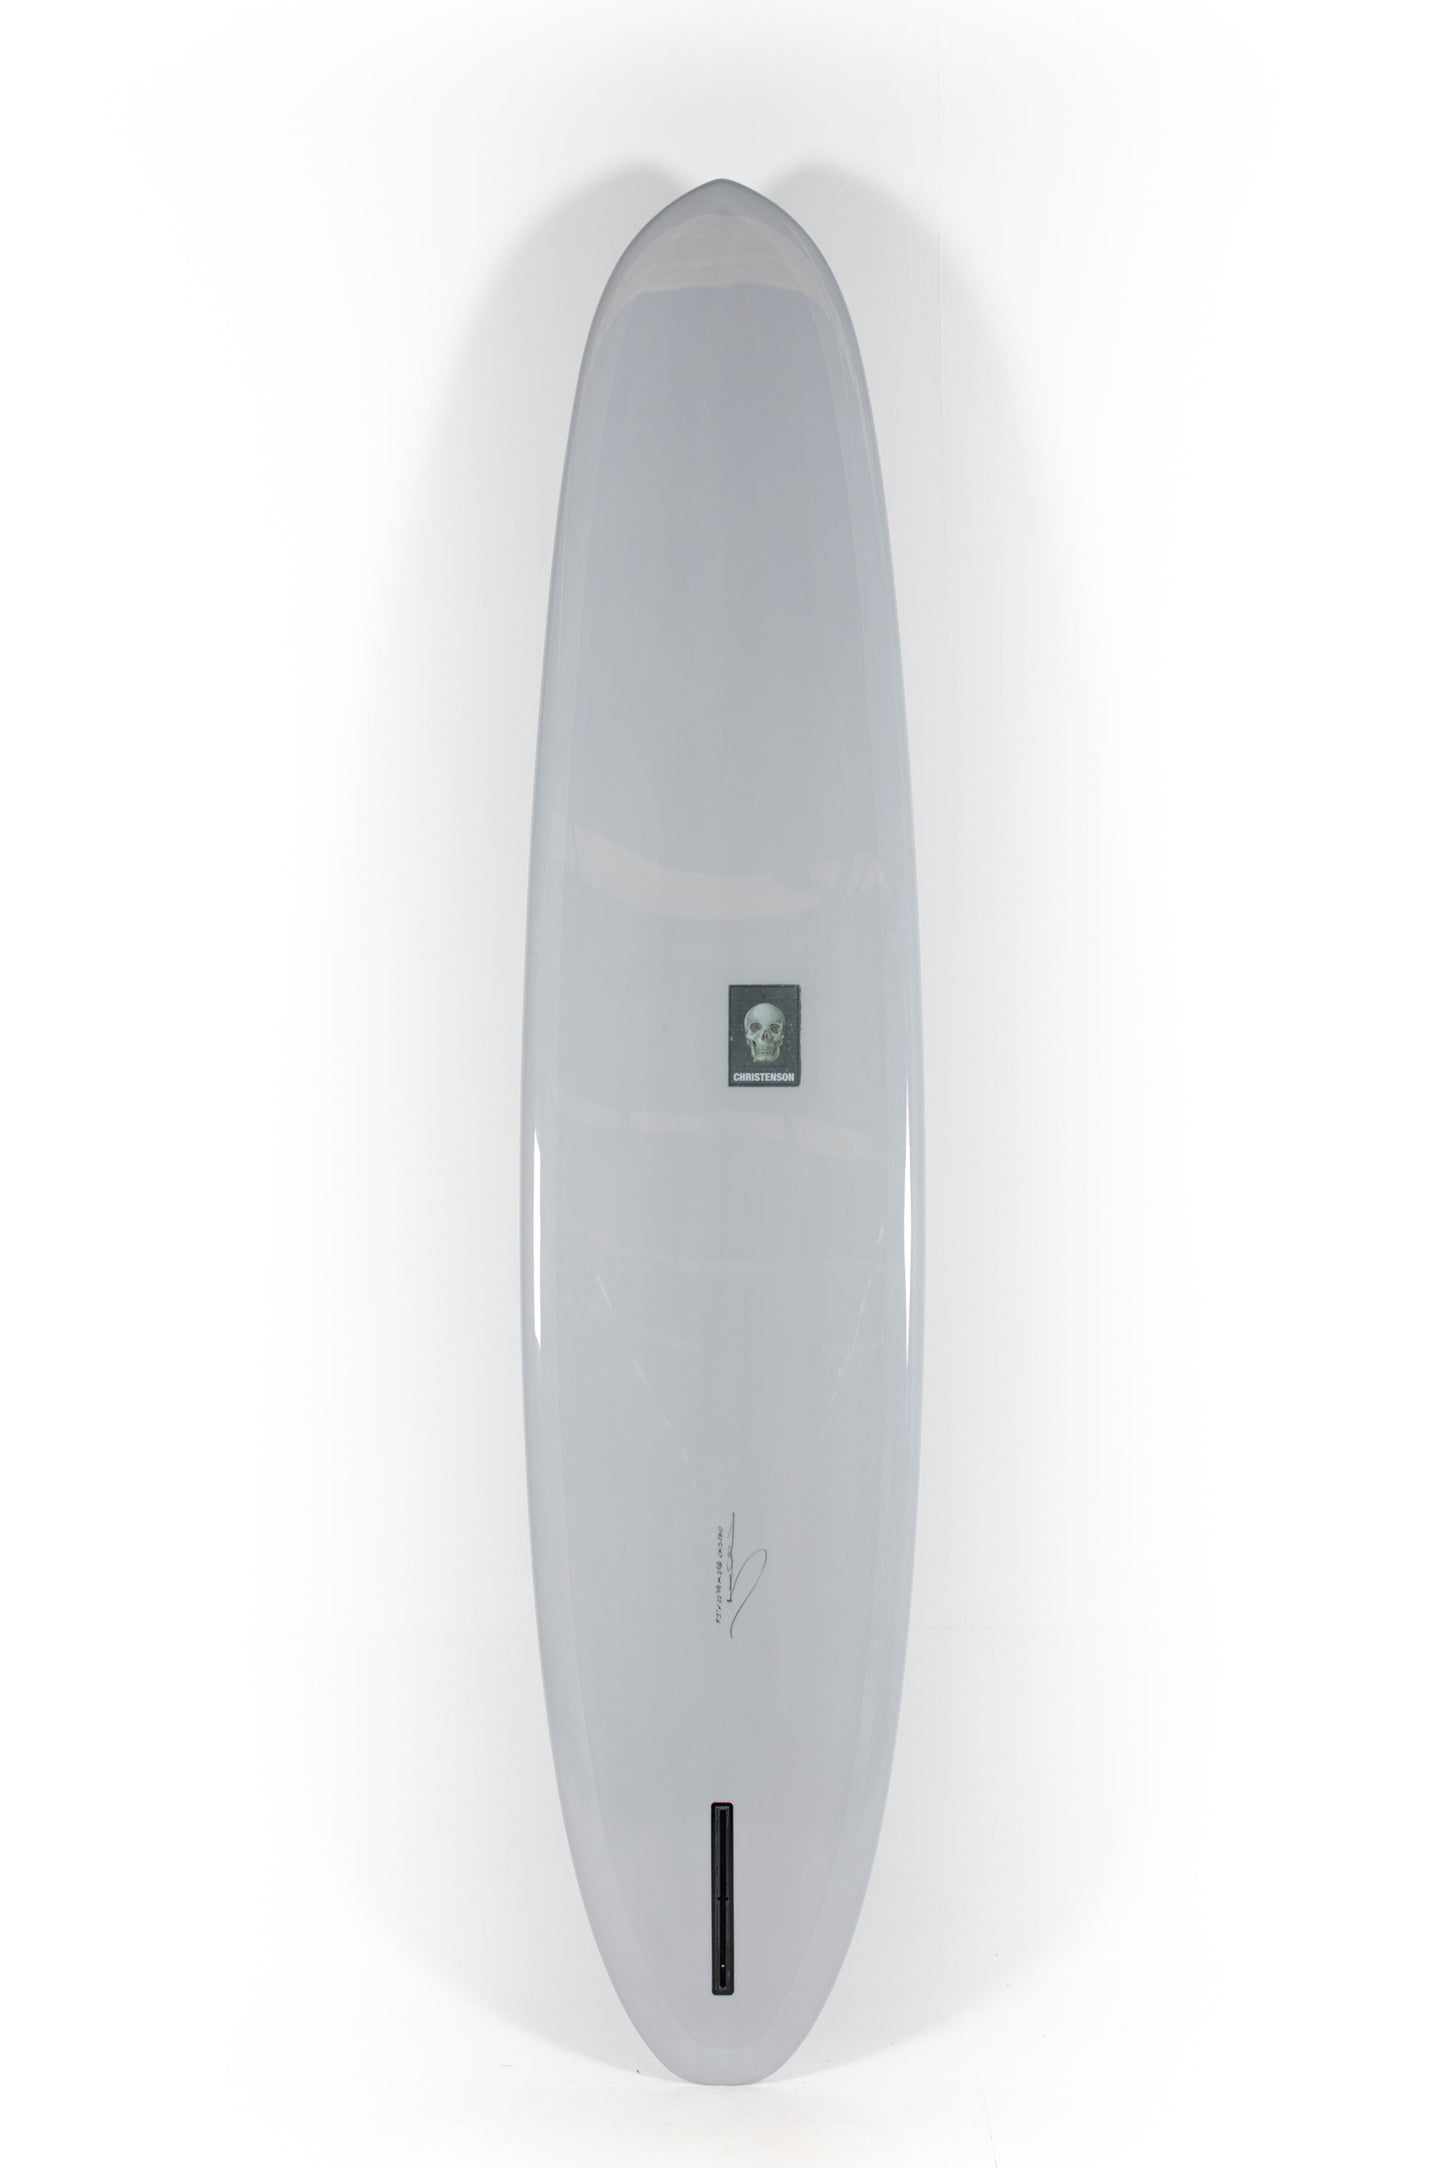 Pukas Surf Shop - Christenson Surfboard  - BANDITO by Chris Christenson - 9'3” x 22 3/4 x 2 7/8 - CX03180